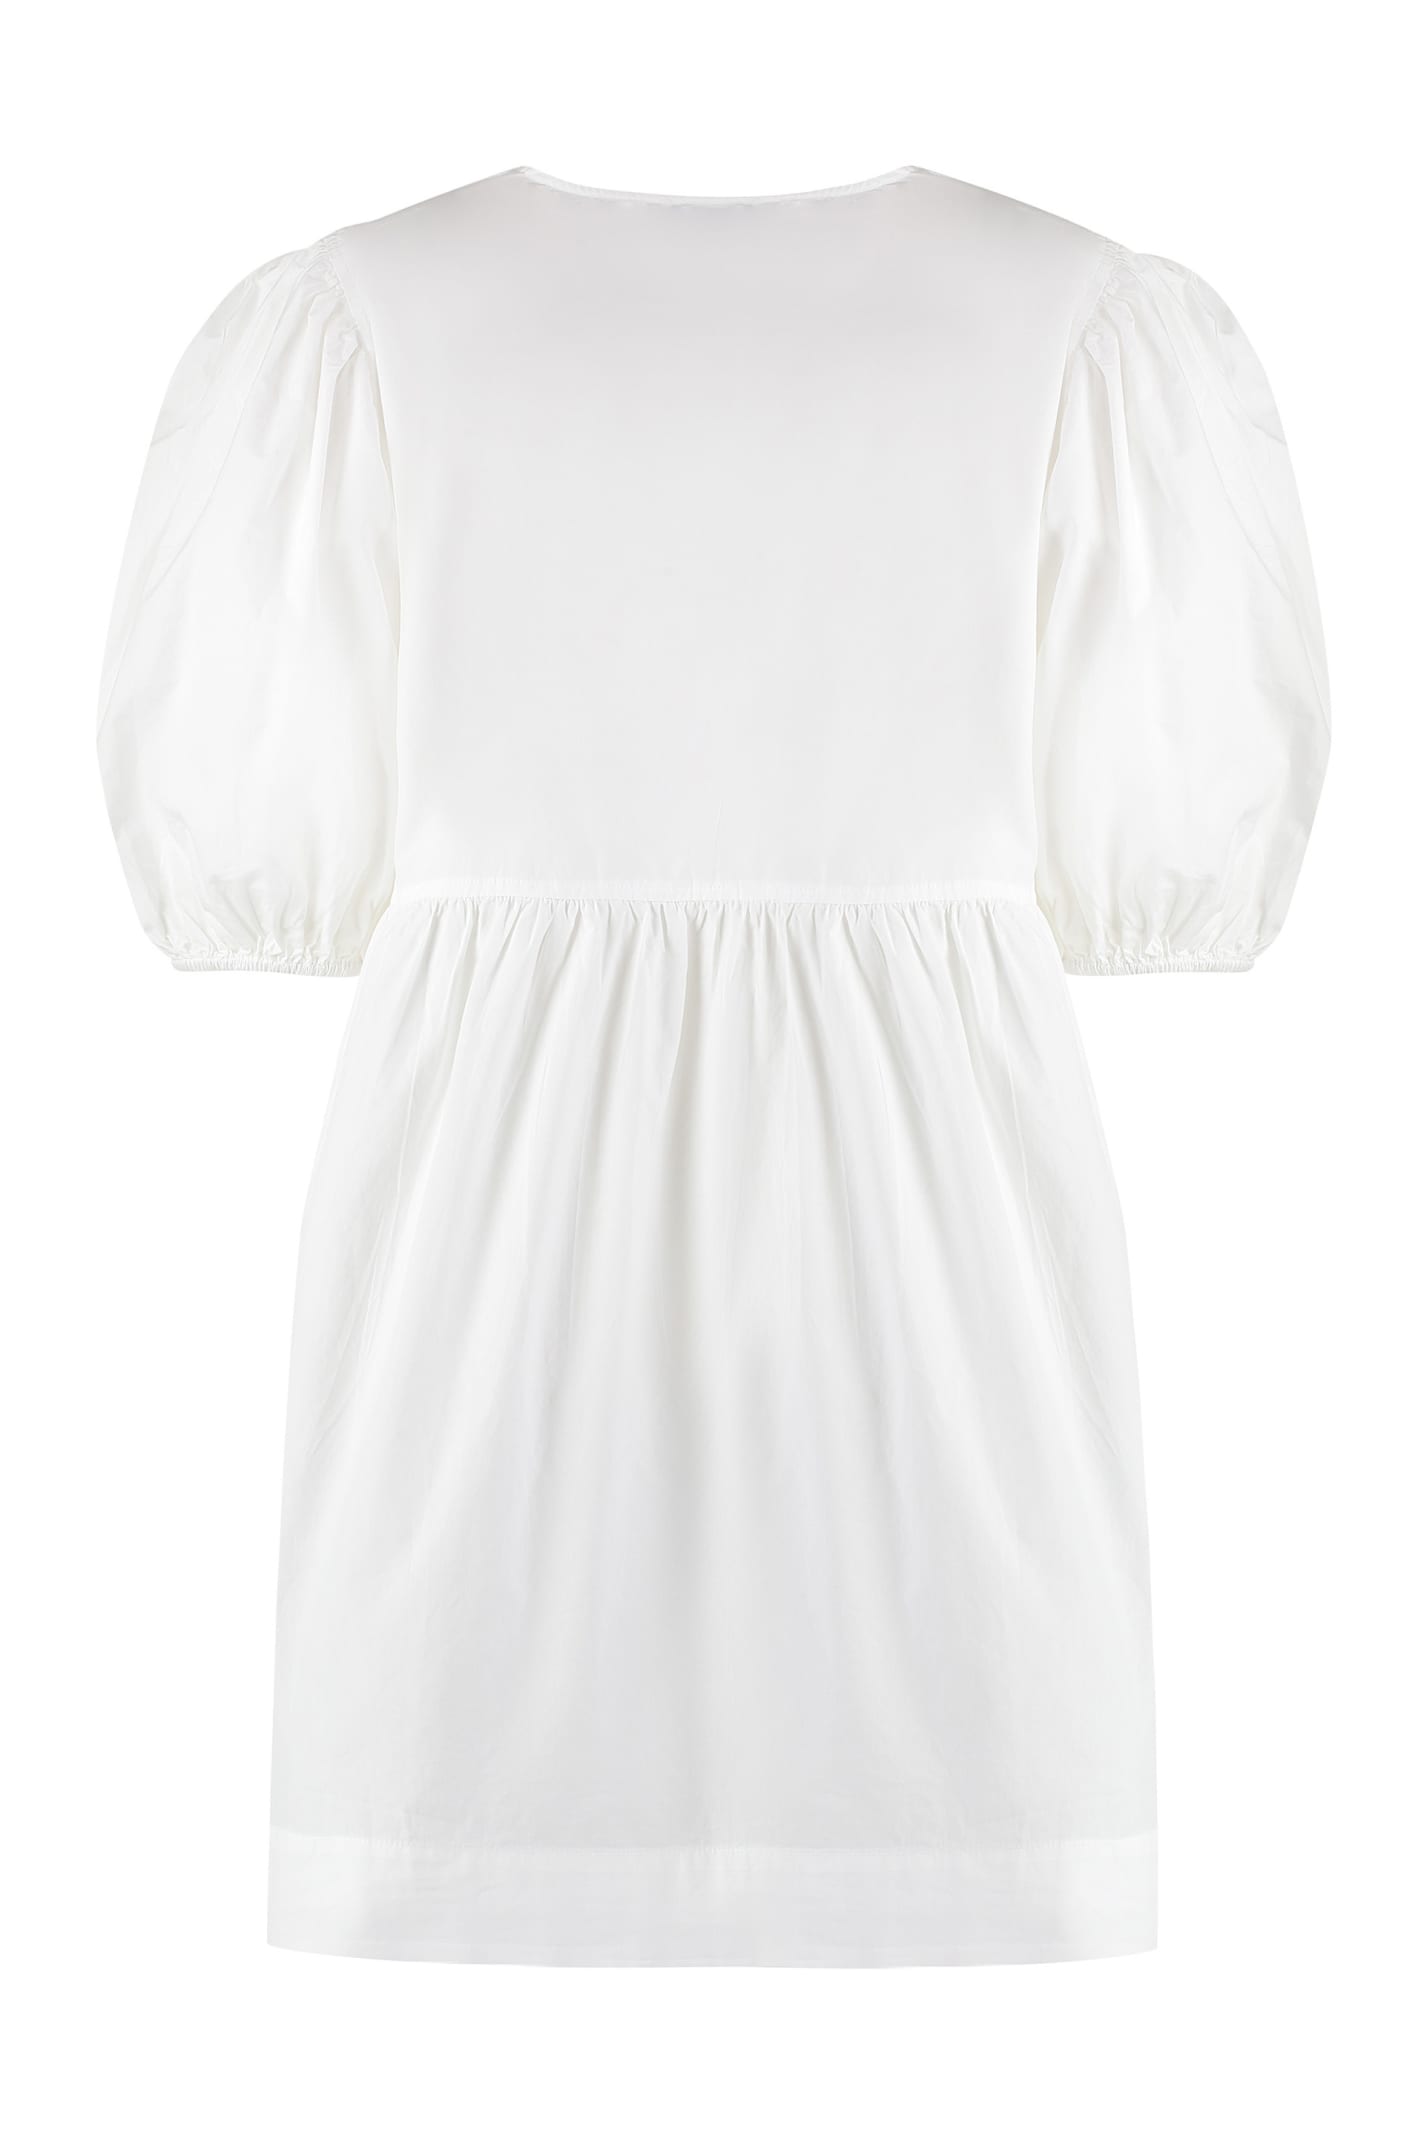 Shop Ganni Poplin Mini Dress In White